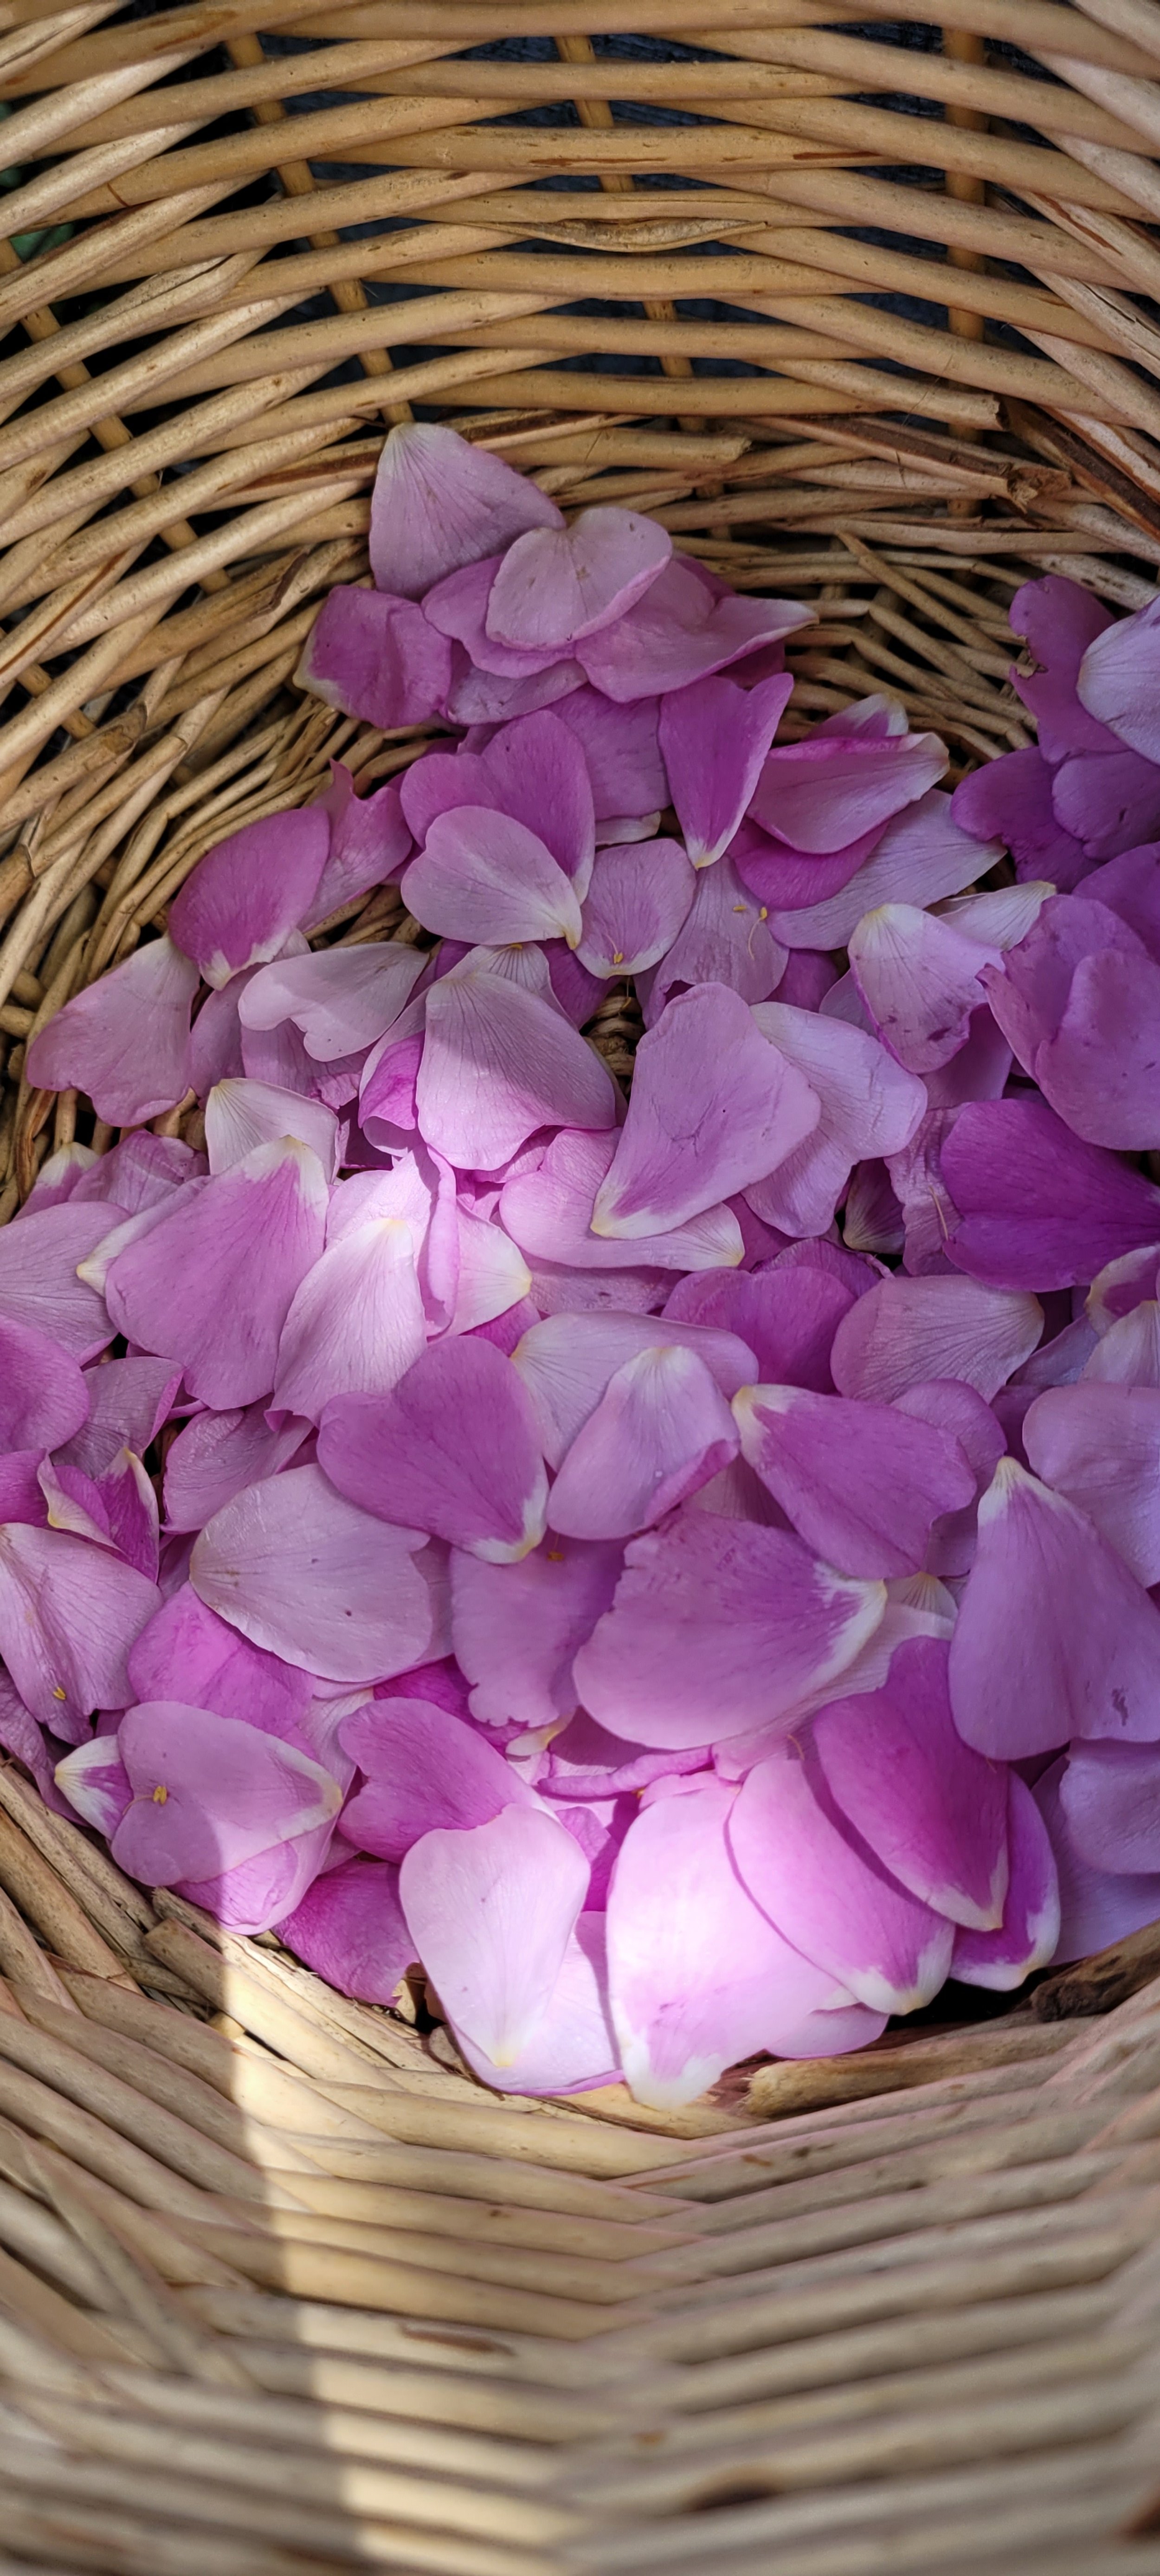 tea workshop - fresh wild rose petals in basket.jpg